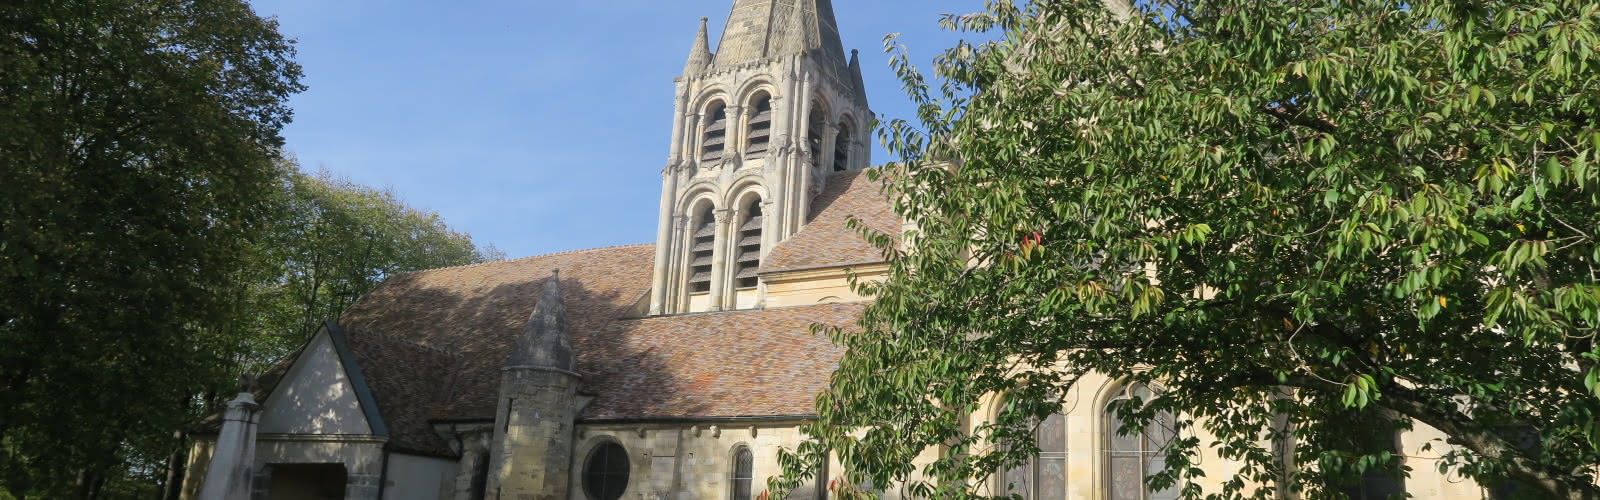 Eglise Saint-Aubin d'Ennery